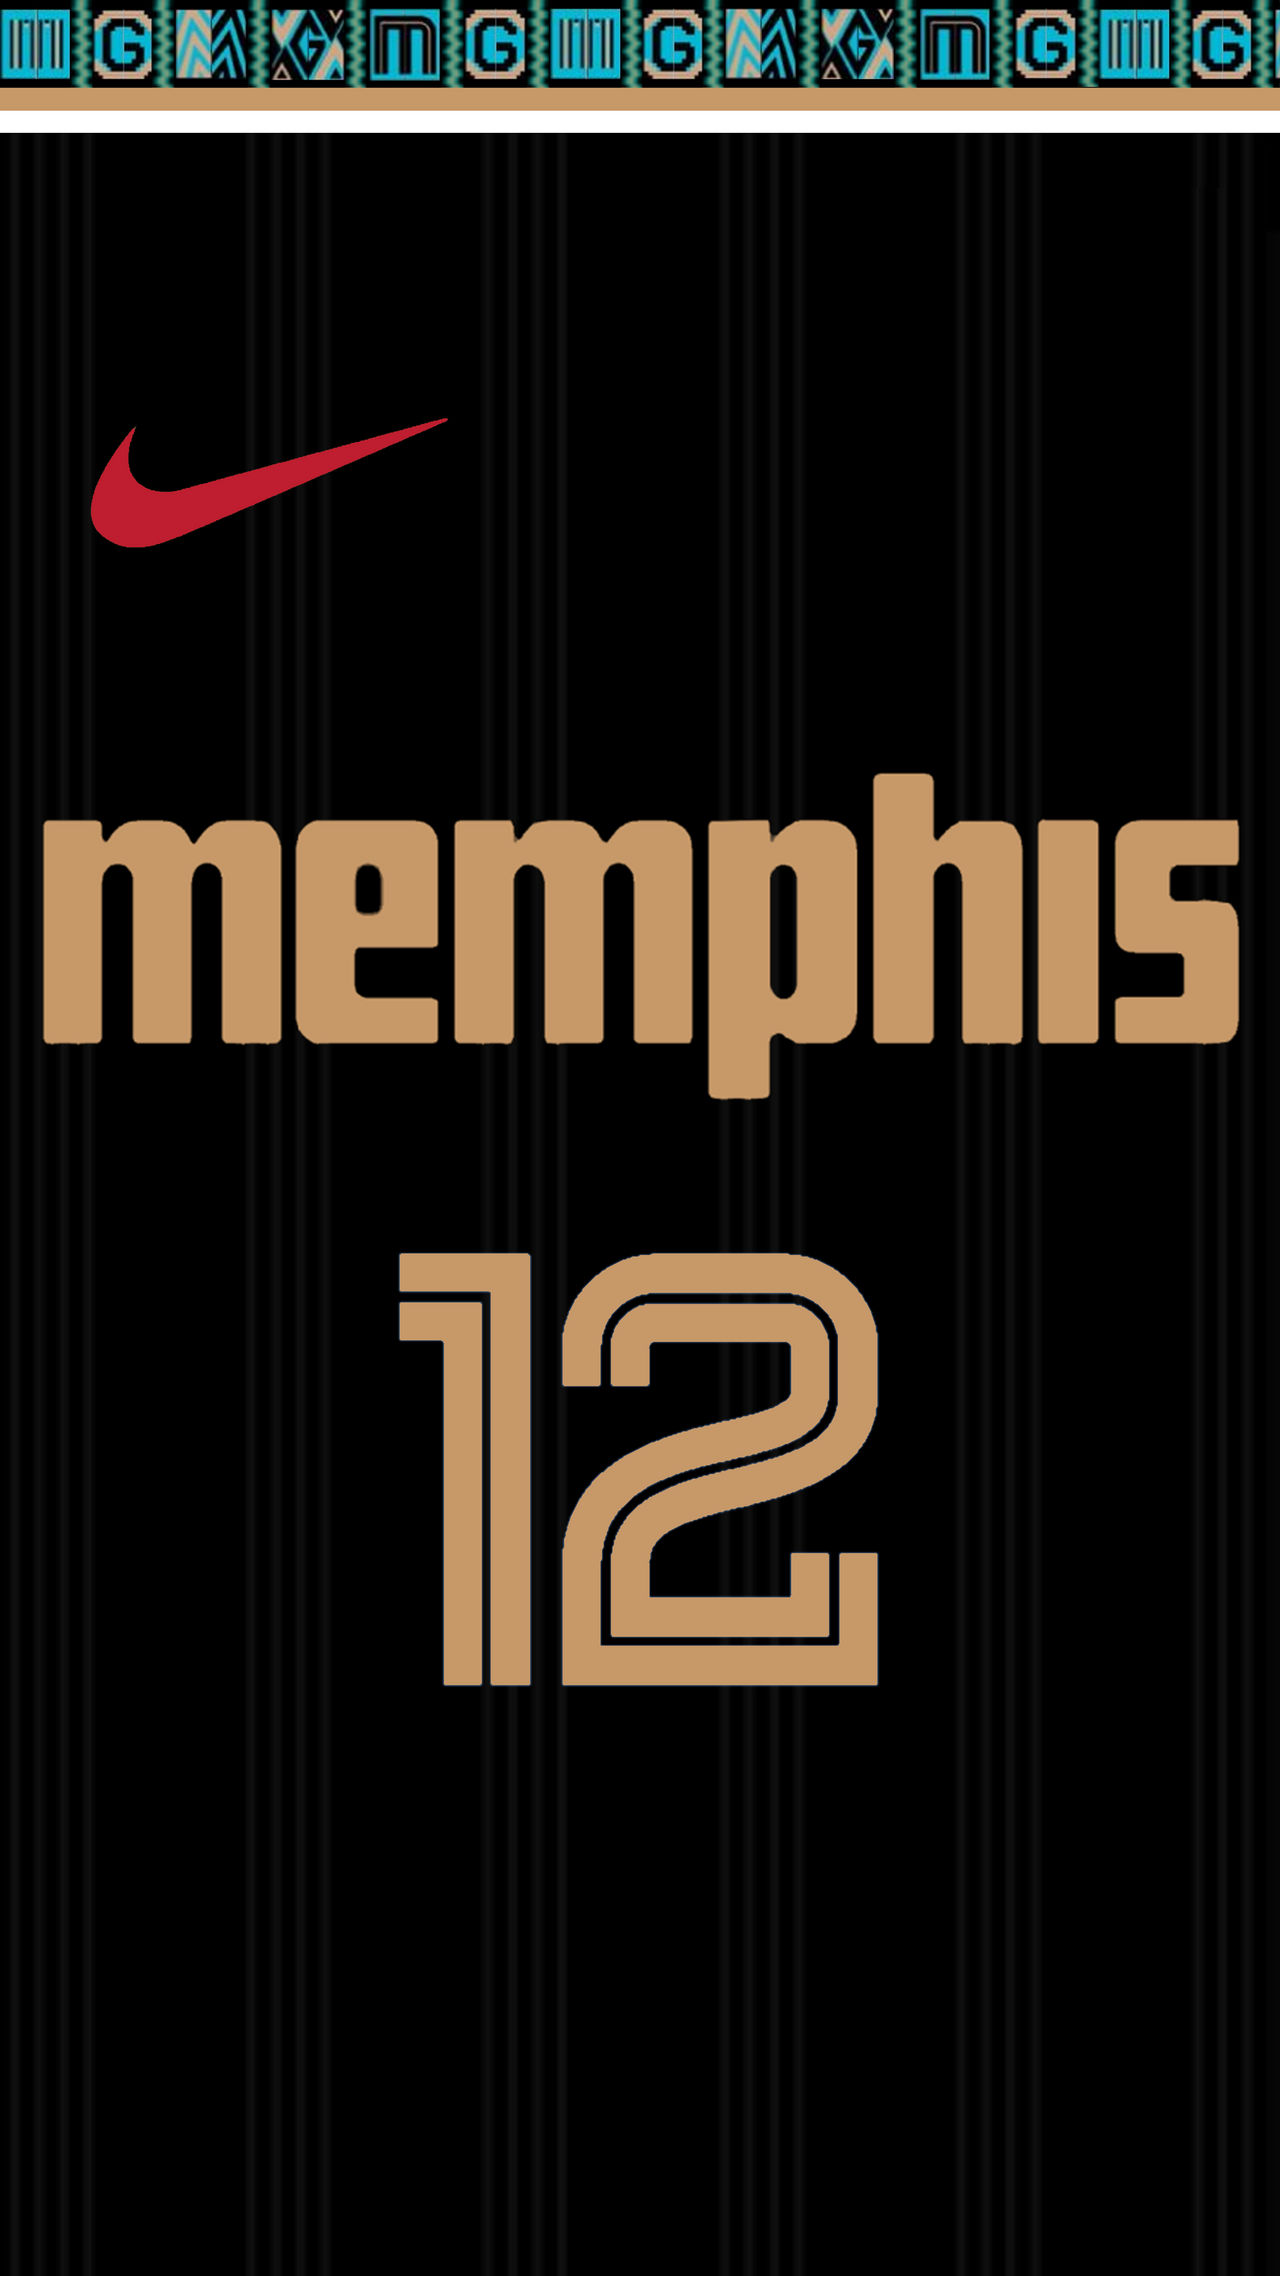 Memphis Grizzlies Wordmark Logo Wallpaper by llu258 on DeviantArt